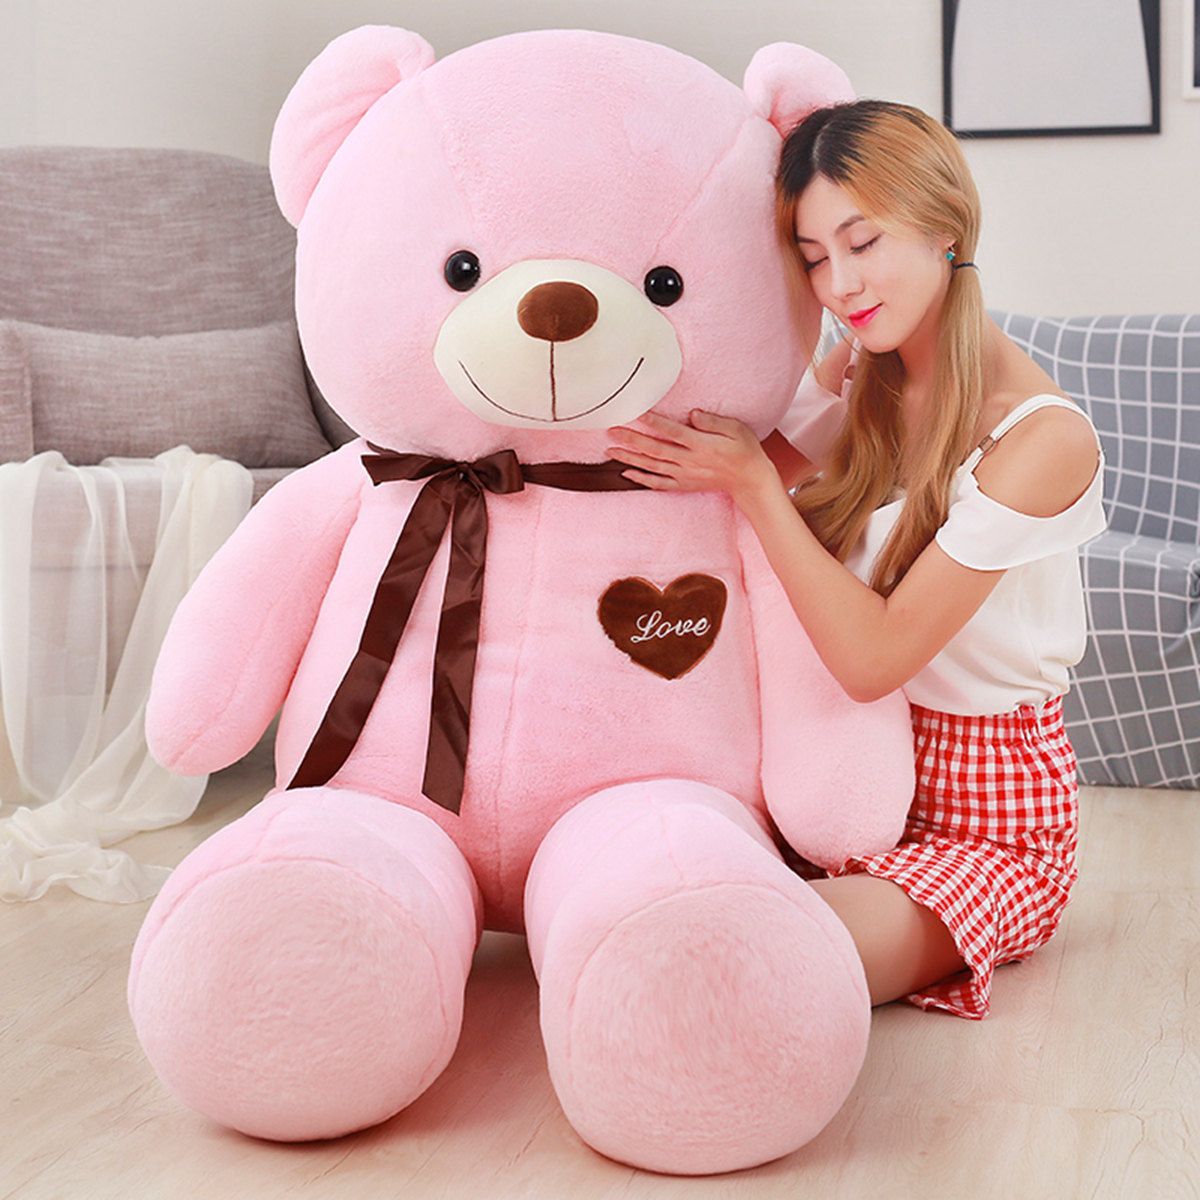 baby doll and teddy bear